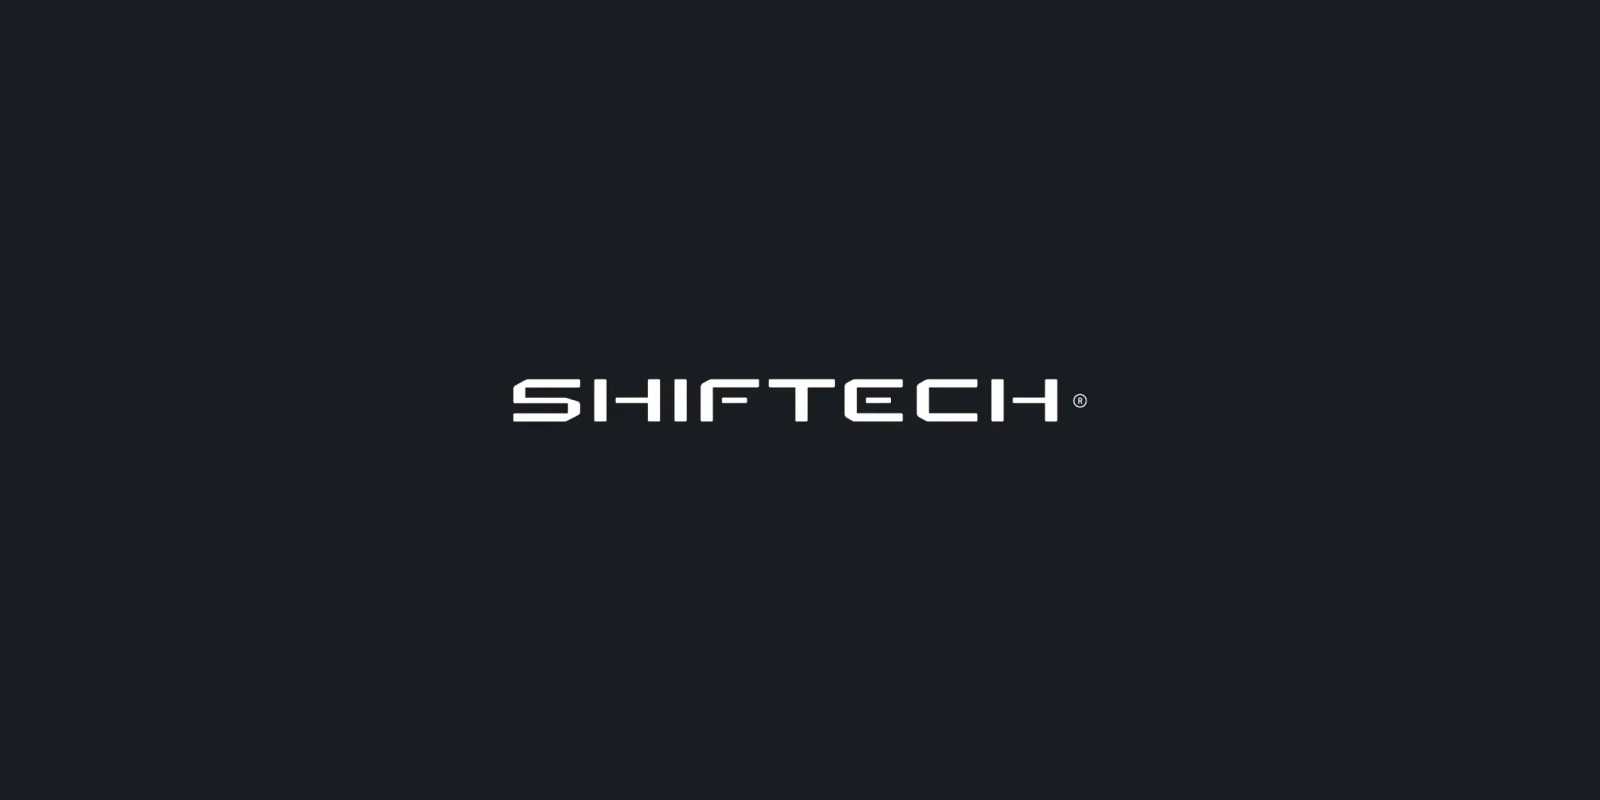 Logo shiftech changement site internet ecommerce 1709132003